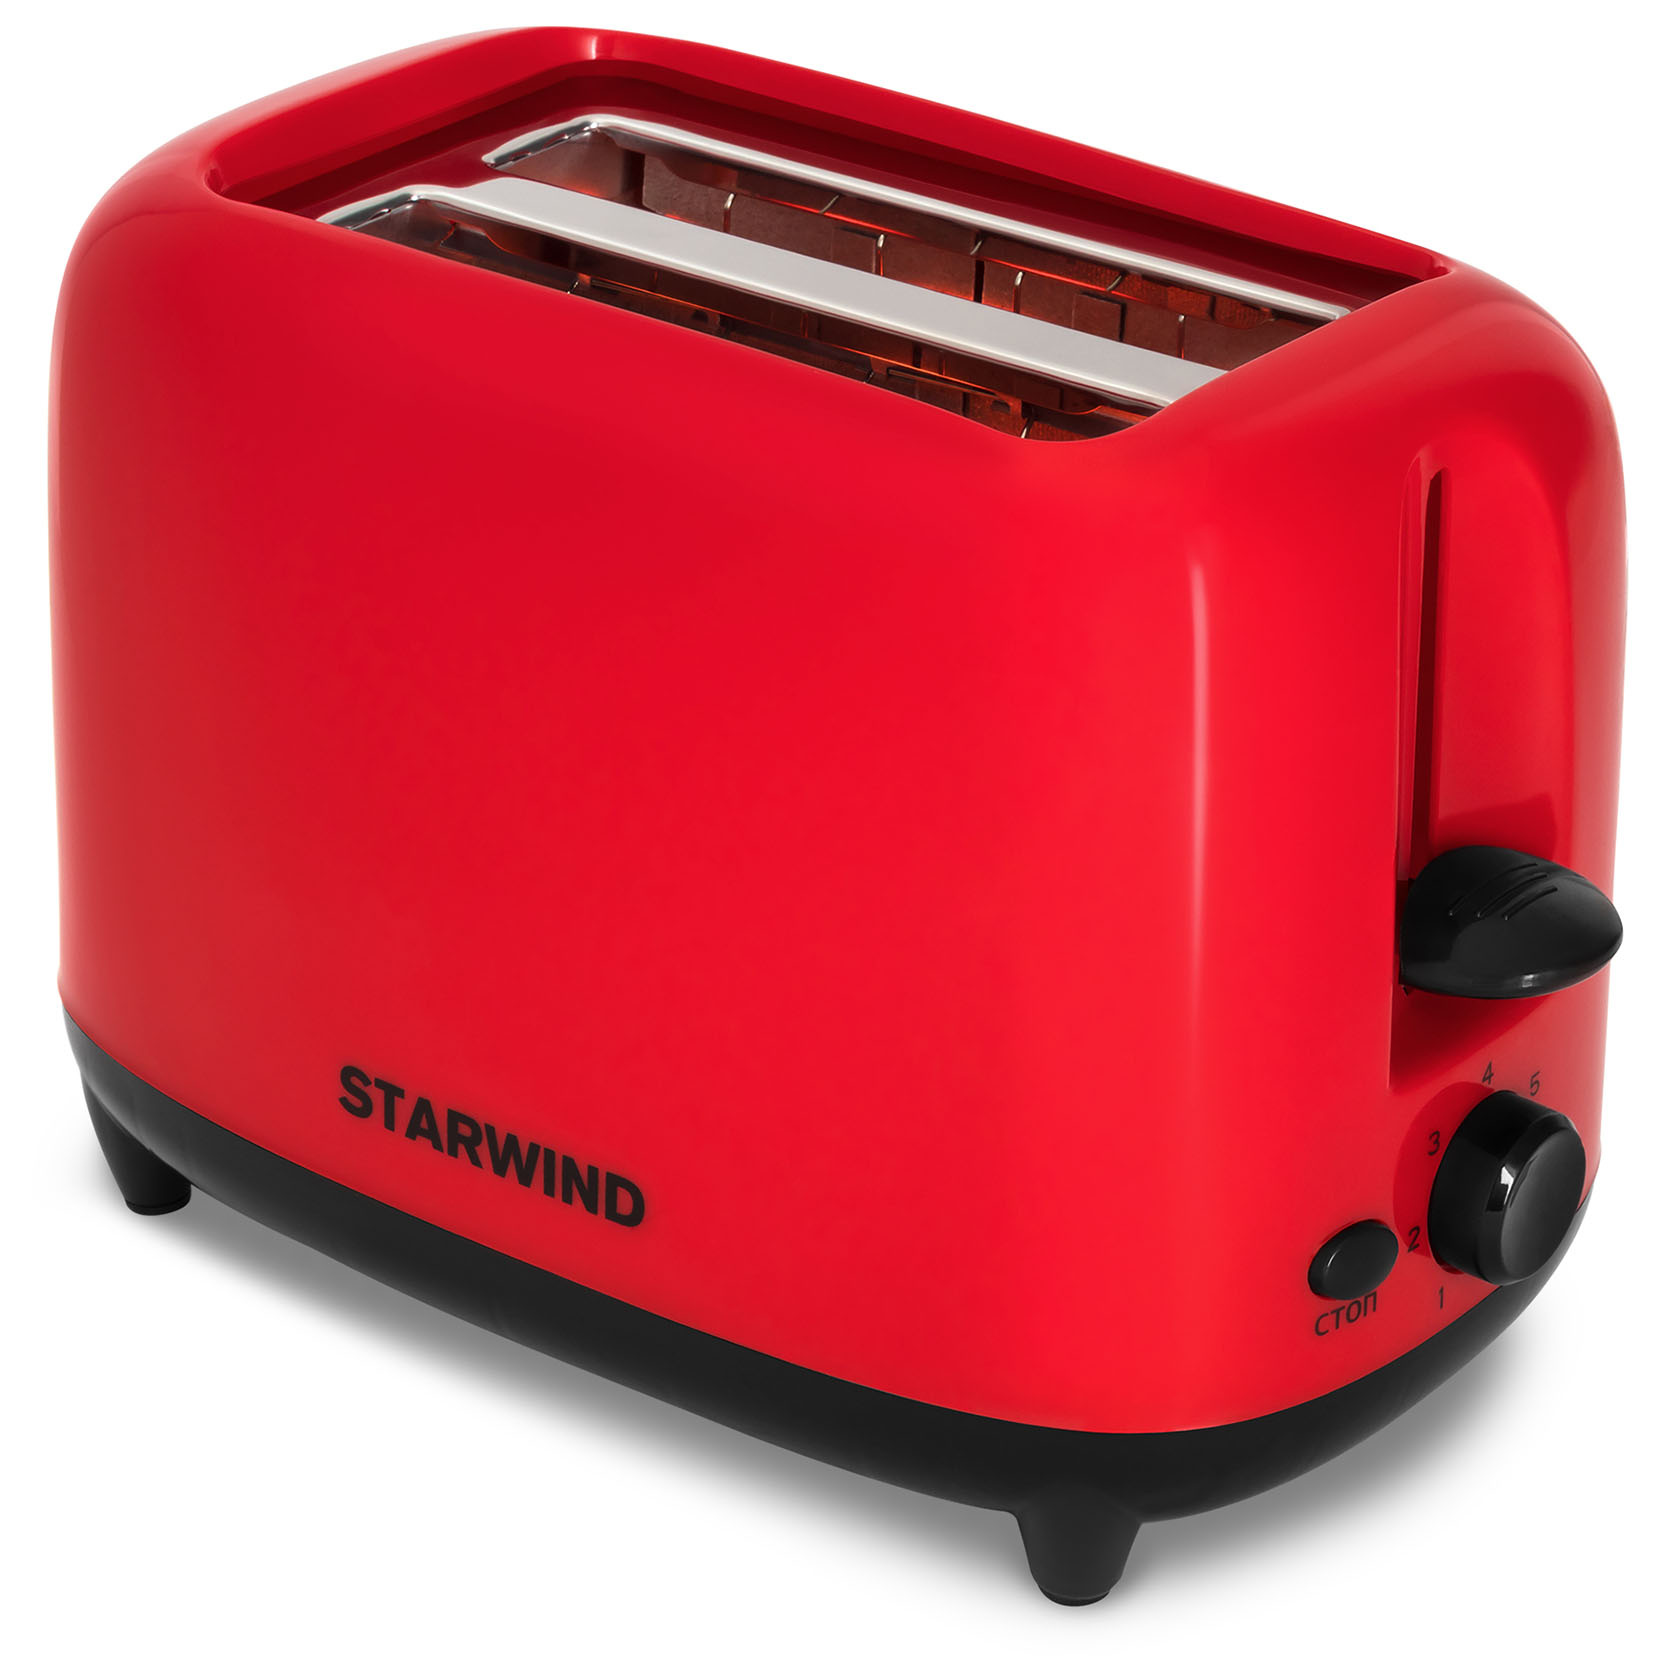 Тостер STARWIND ST7003 красный, черный тостер starwind st7003 красный